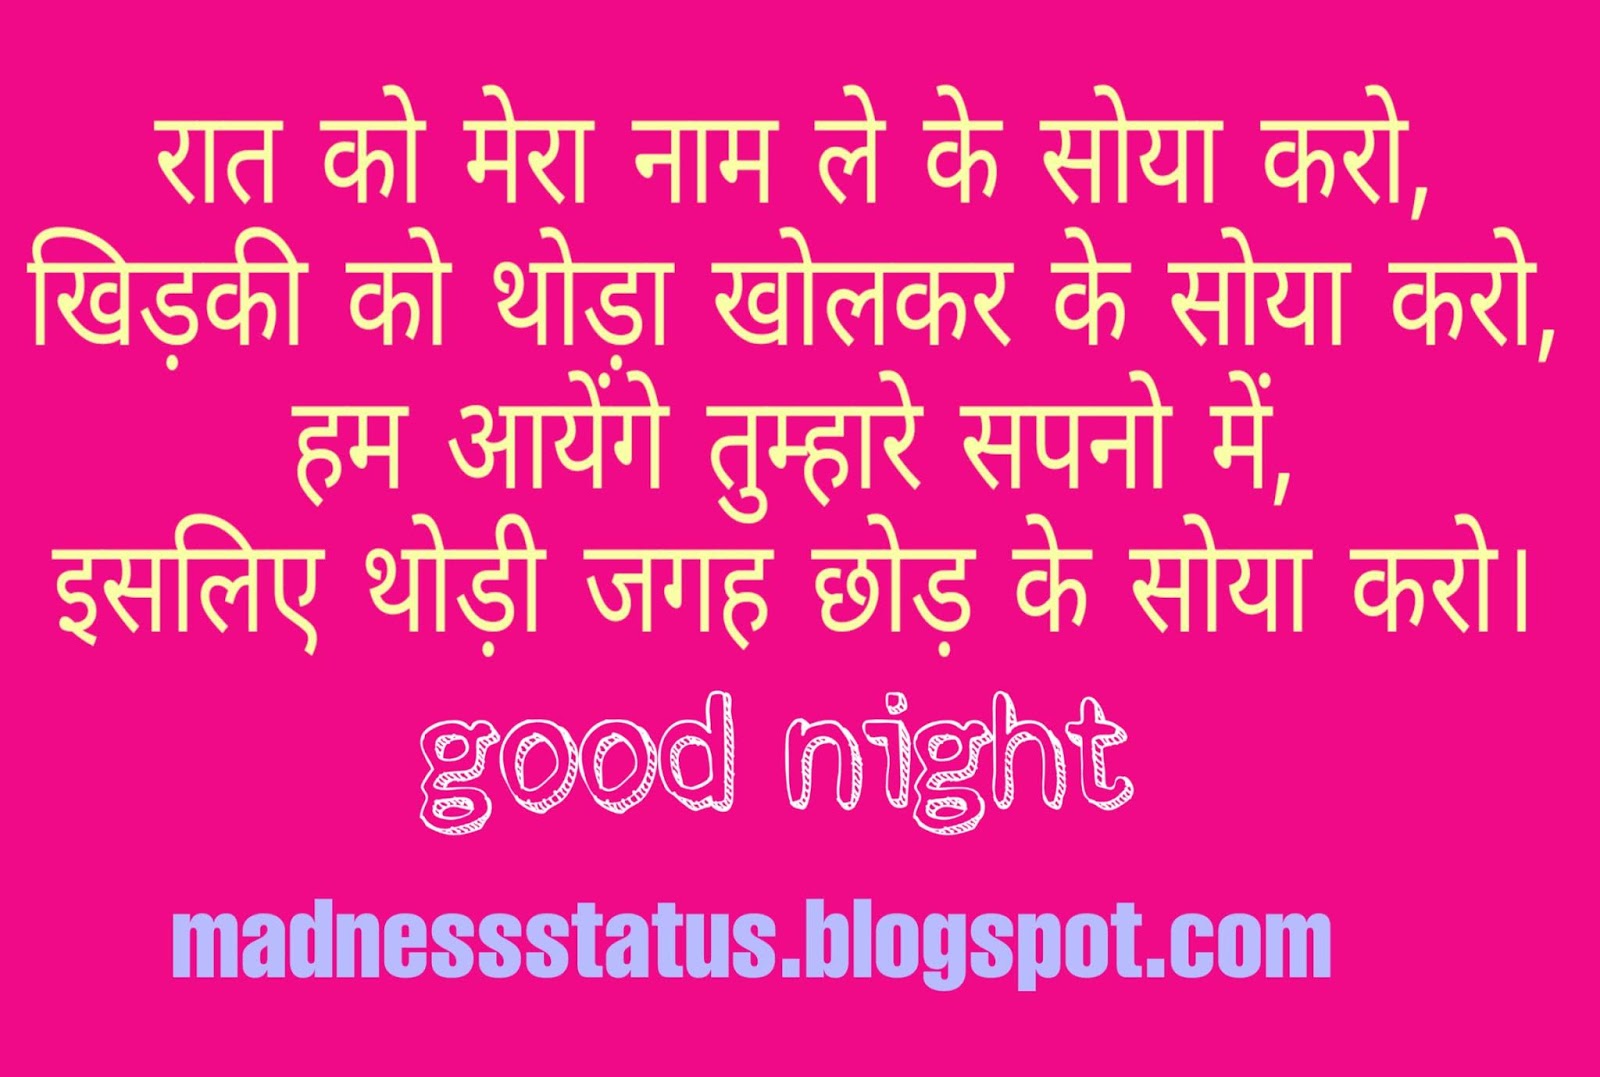 madstatus - good night status in hindi for friends